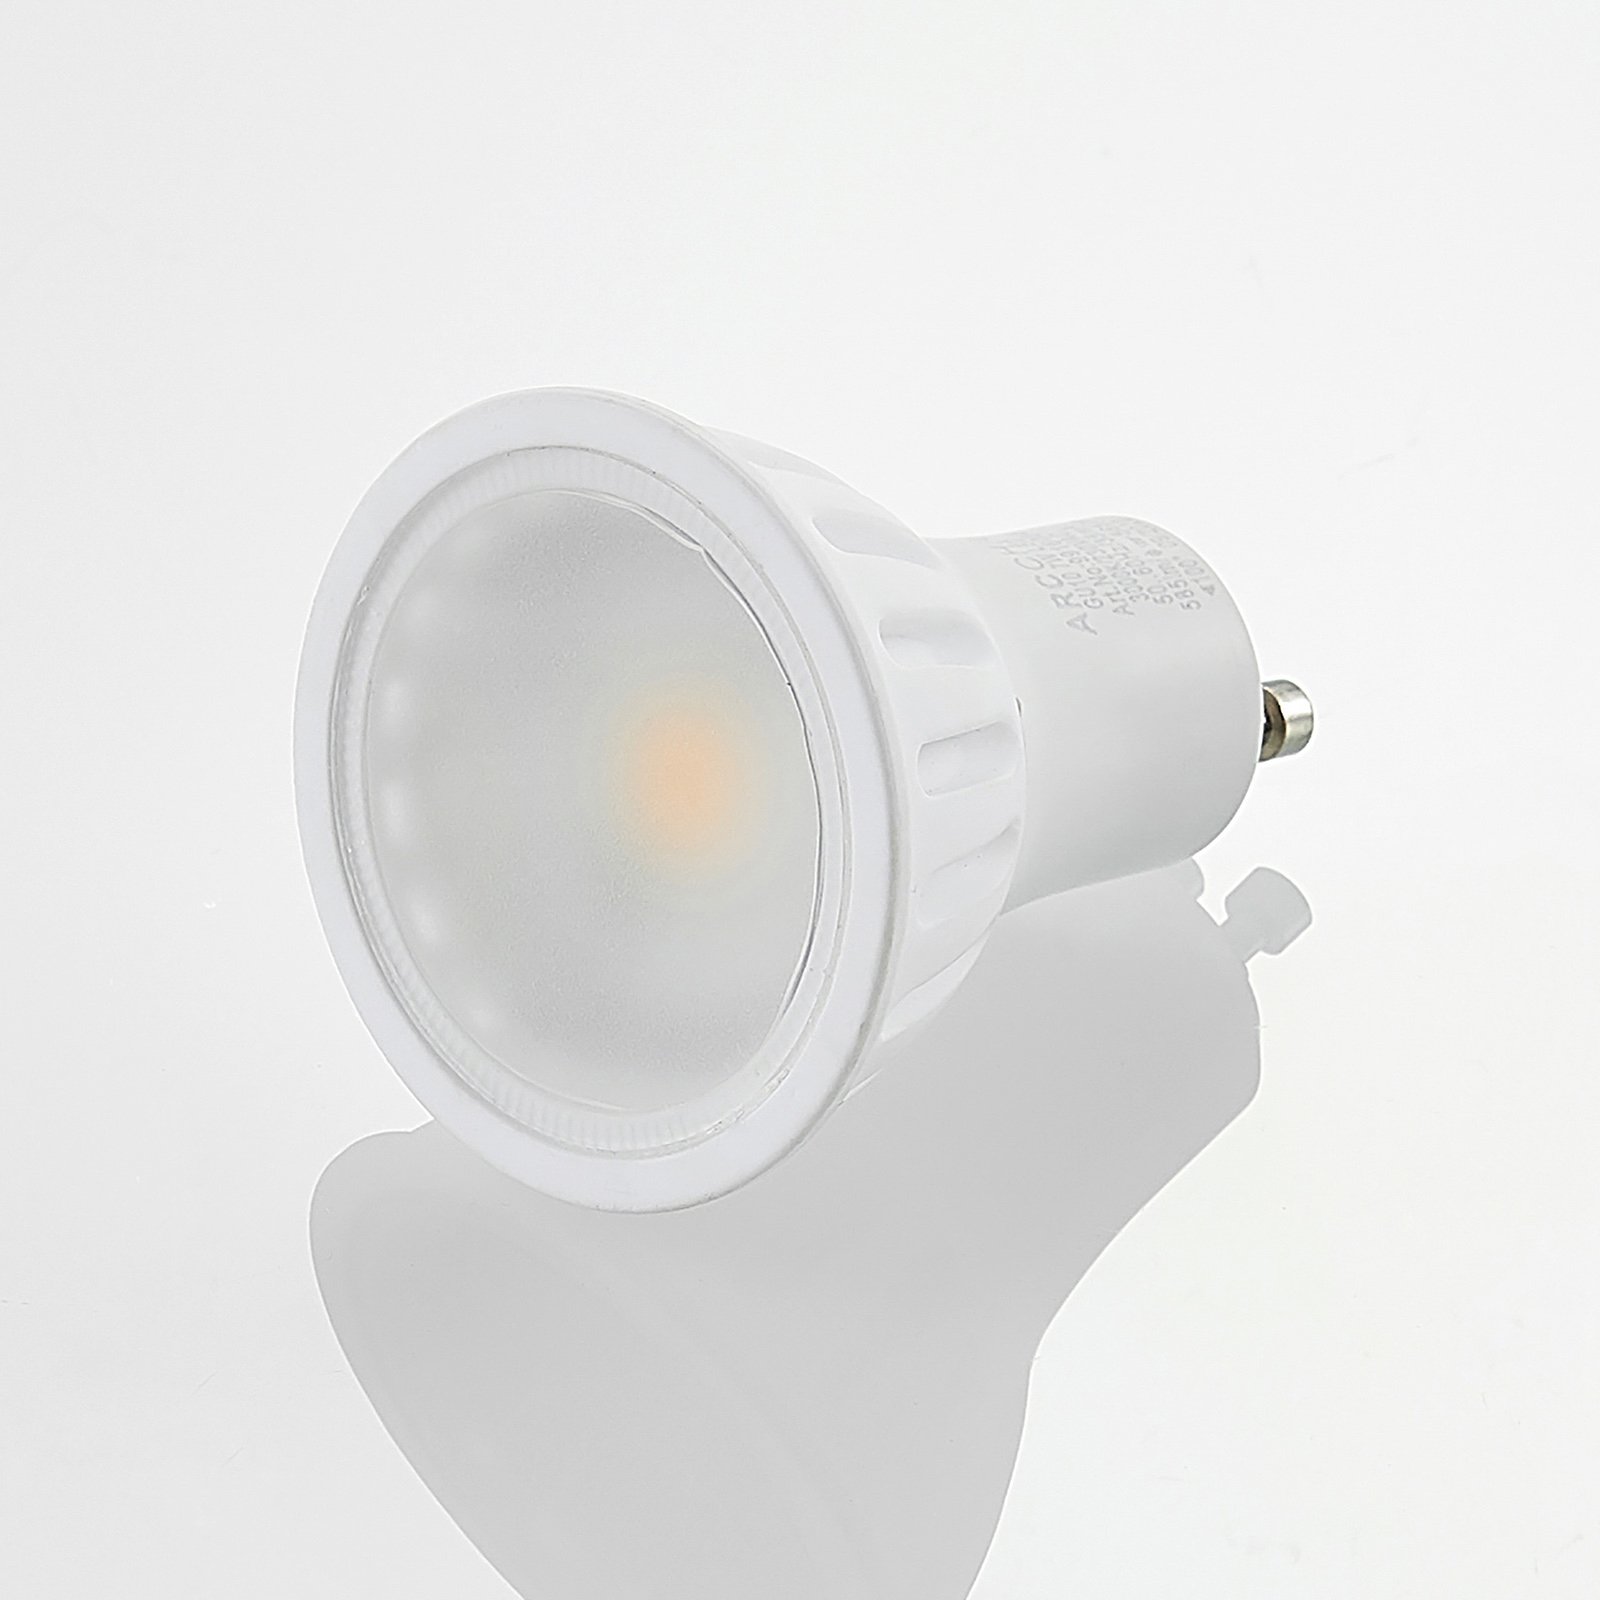 Arcchio LED reflector GU10 100° 7W 3.000K dimbaar